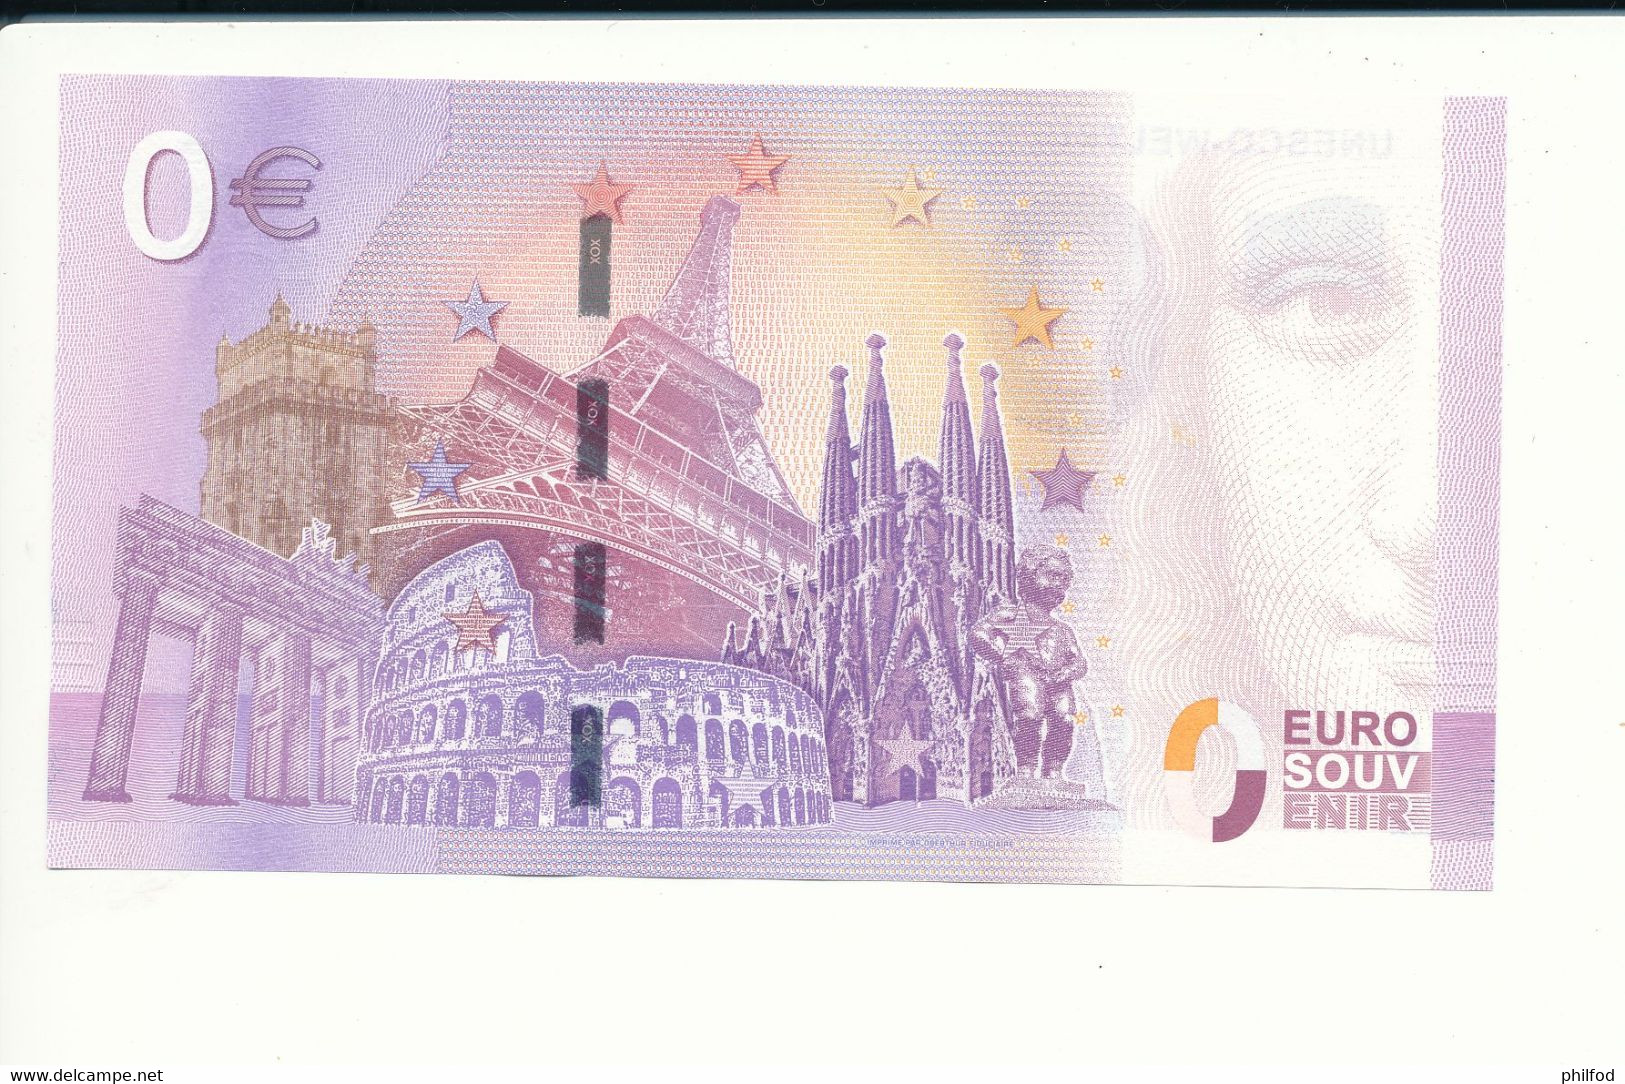 Billet Souvenir - 0 Euro - XEHB - 2017-4 - UNESCO - WELTKULTURERBE WARTBURG - N° 9657 - Alla Rinfusa - Banconote